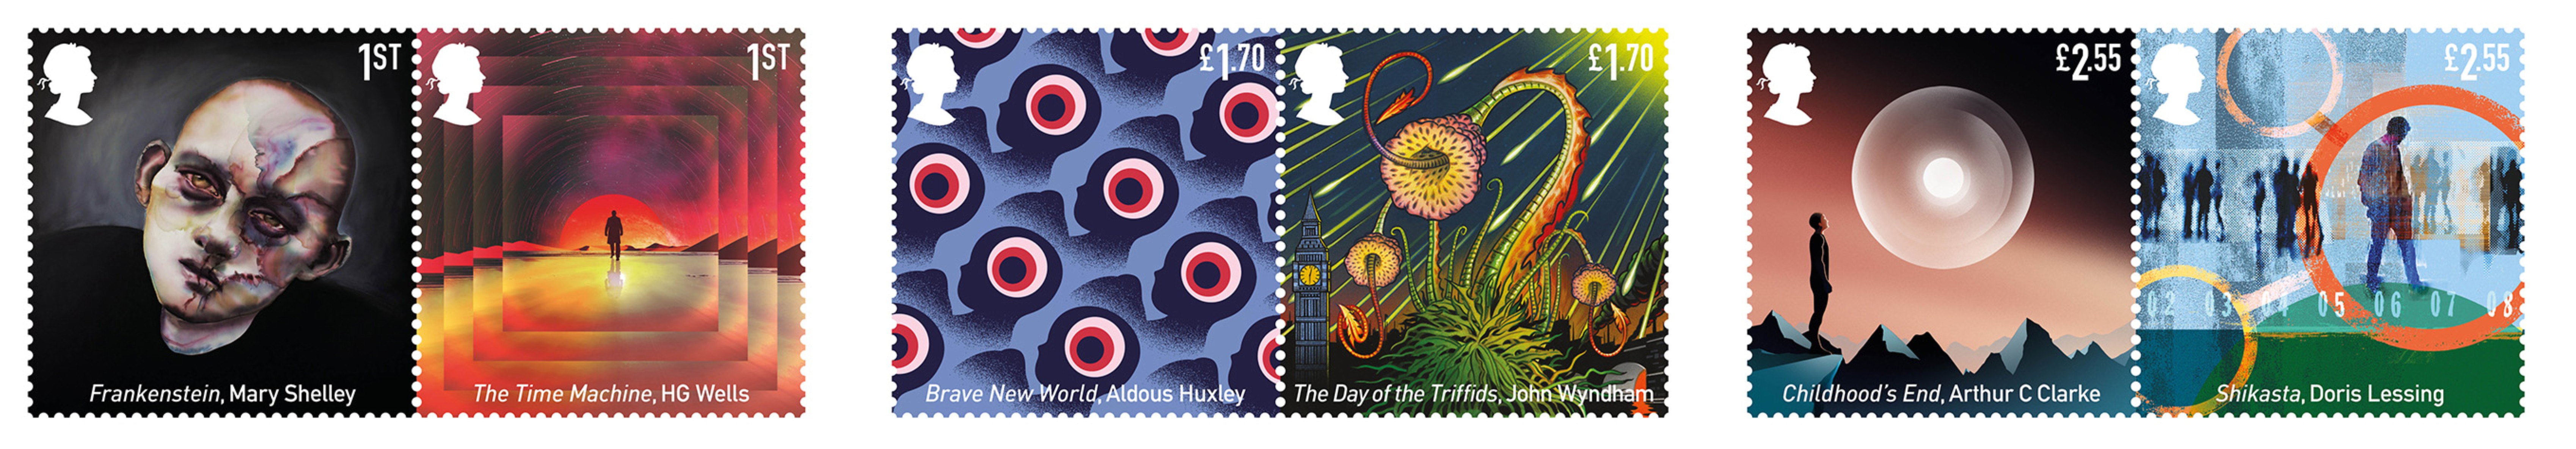 Classic sci-fi stamps